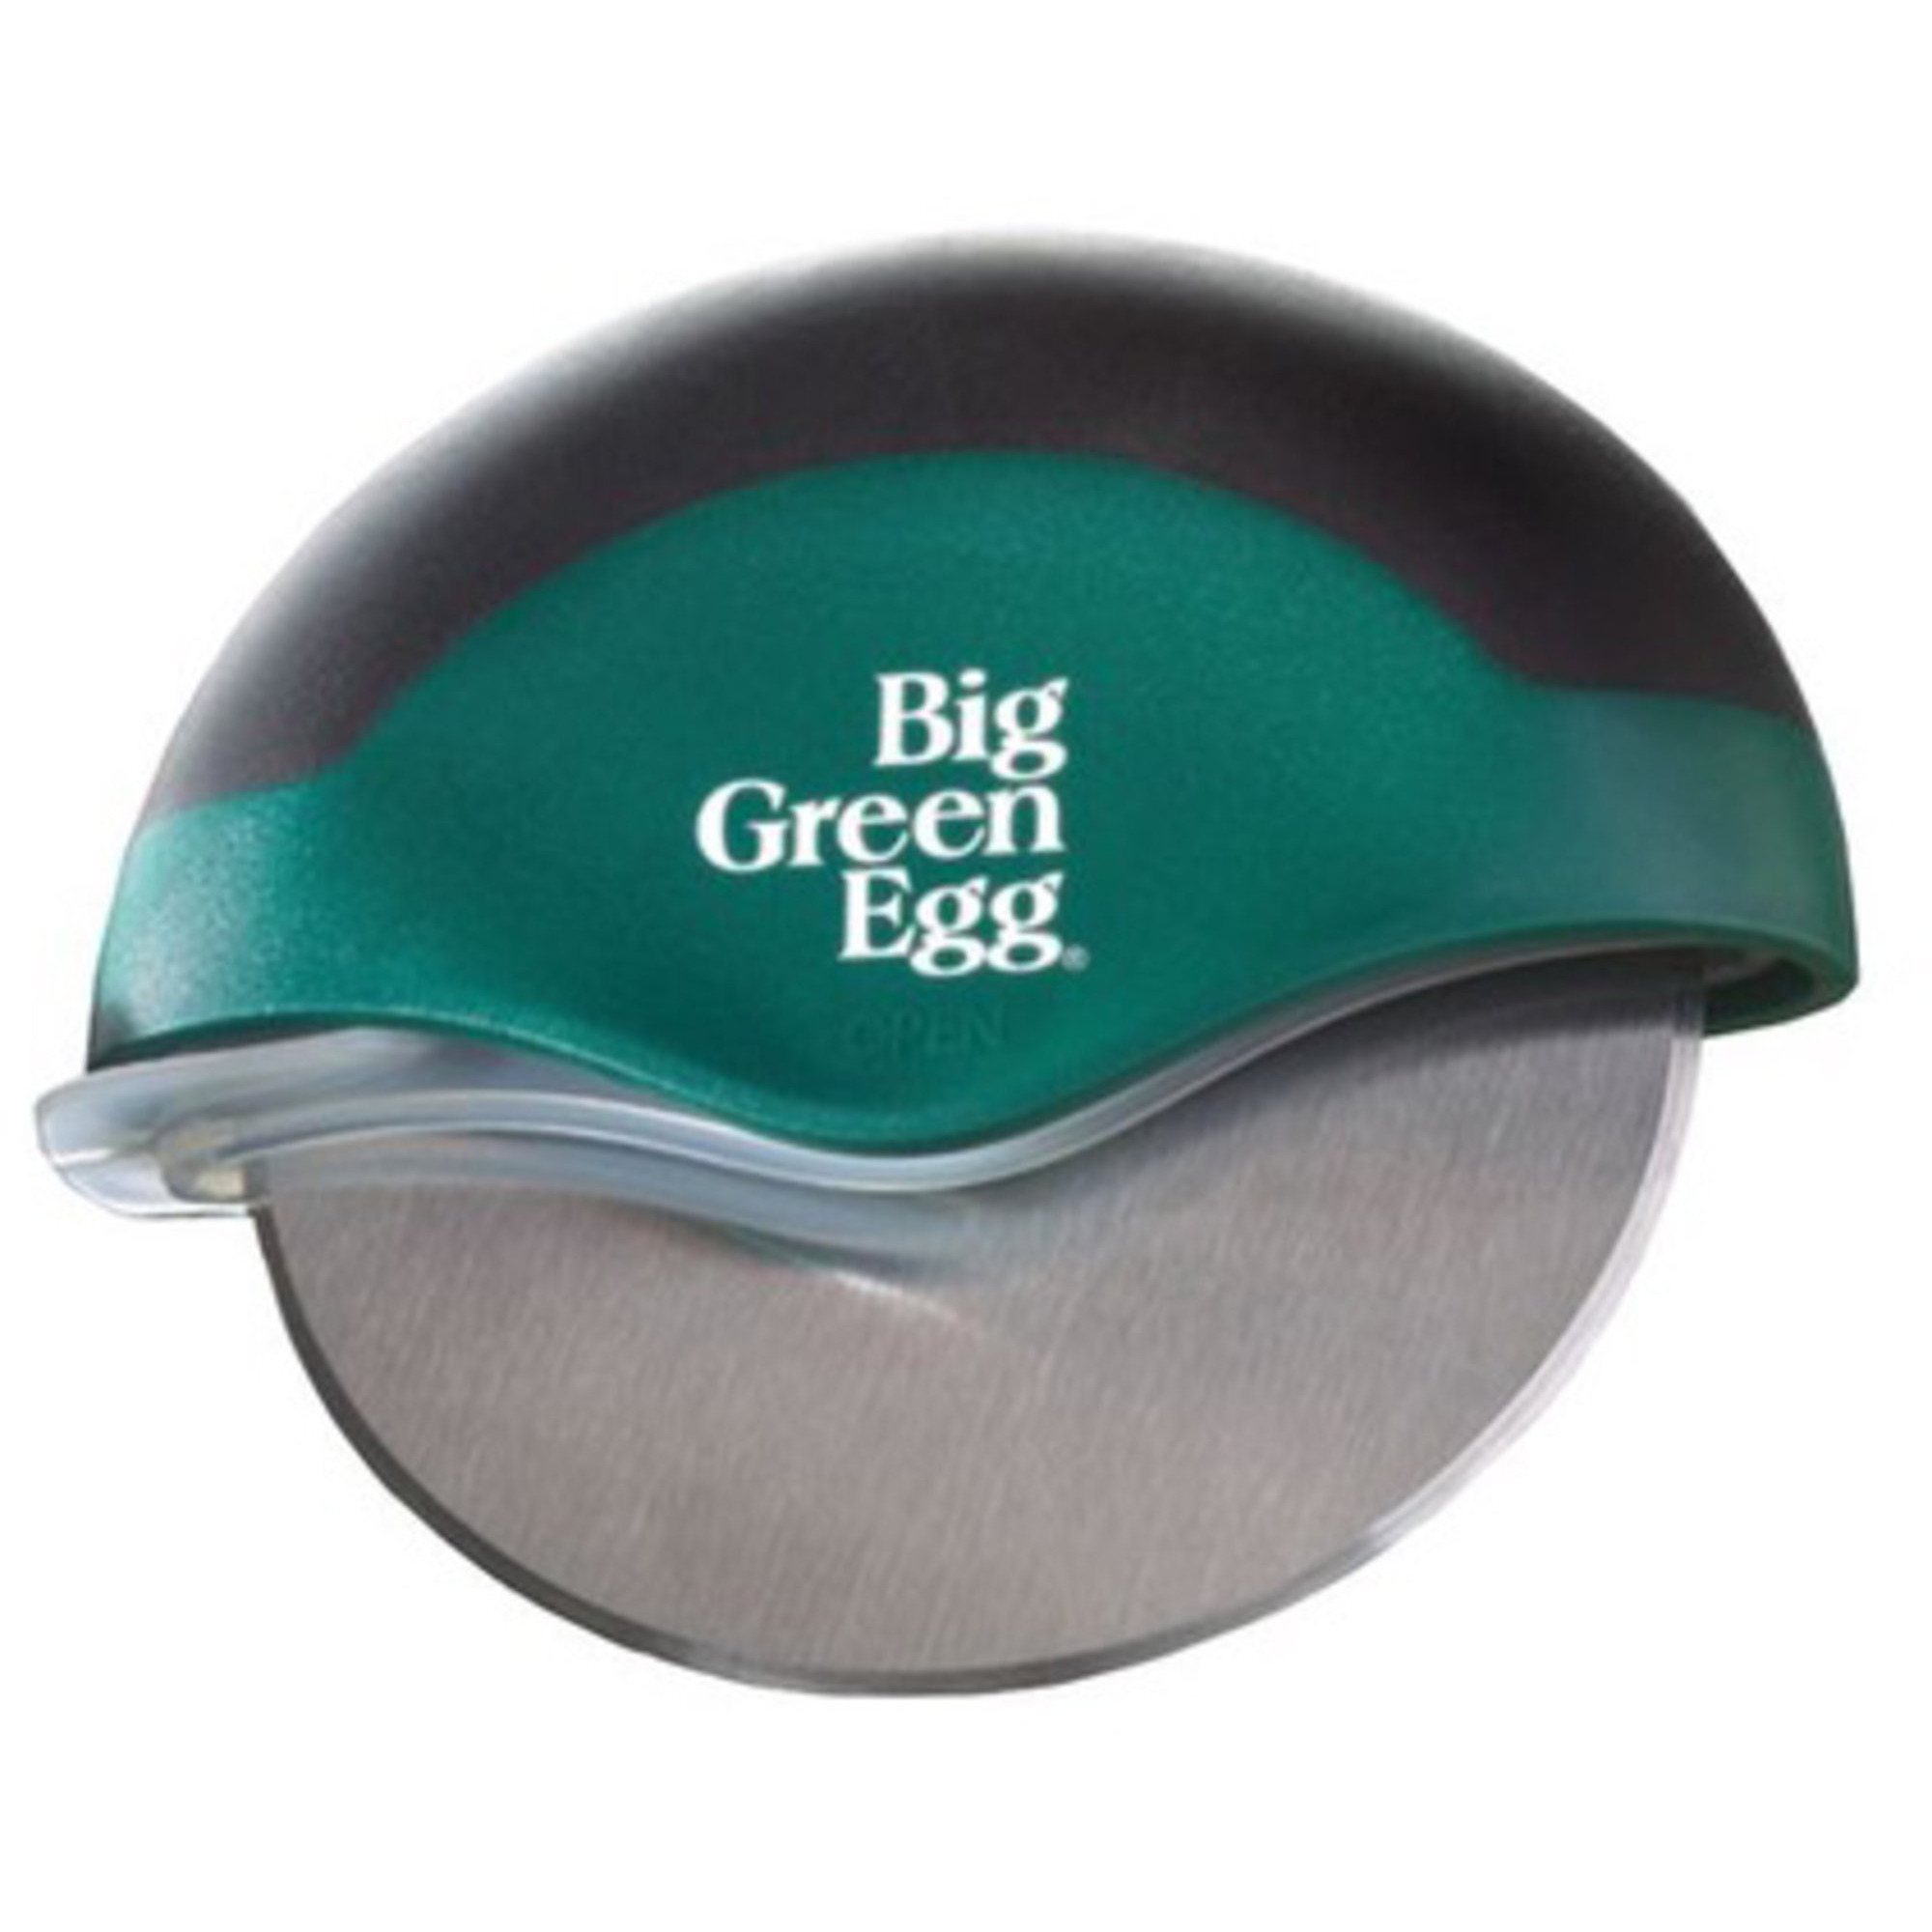 Big Green Egg Pizzaskärare